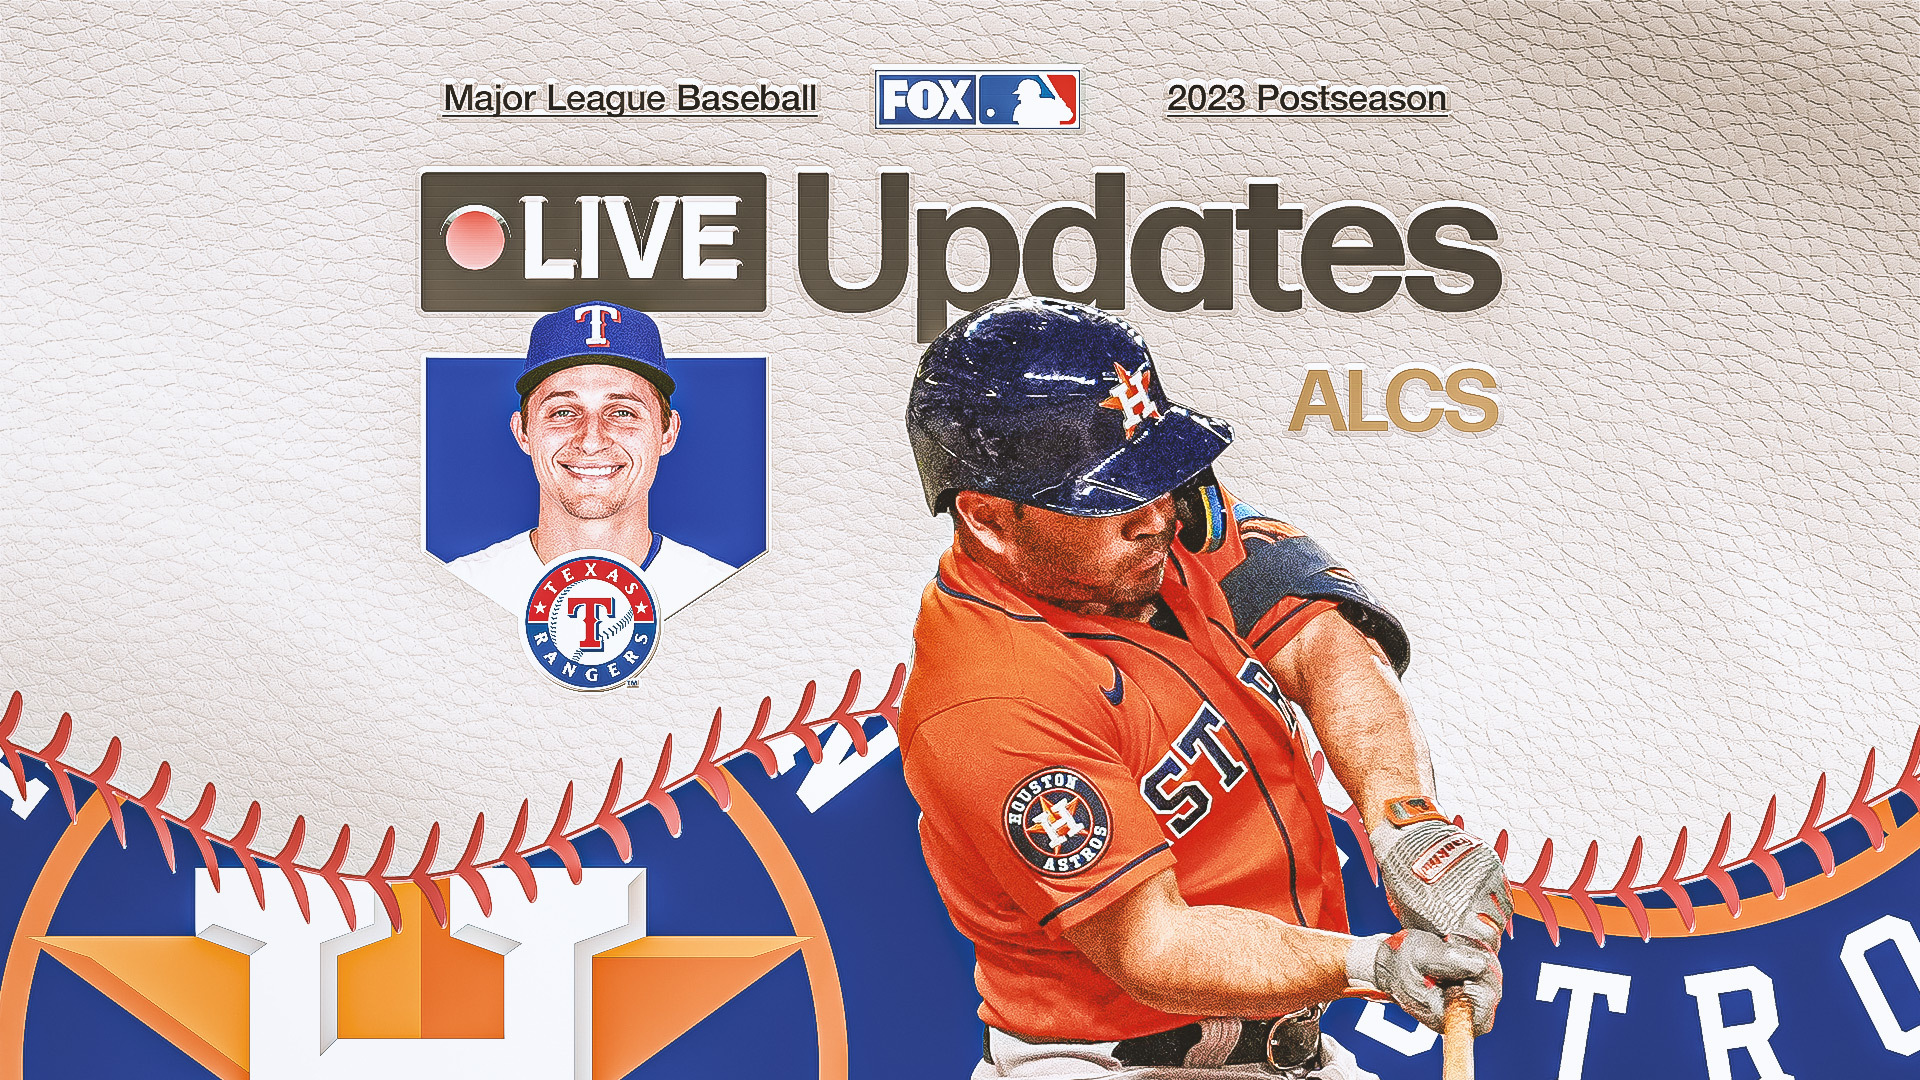 Texas Rangers vs Houston Astros - October 23, 2023